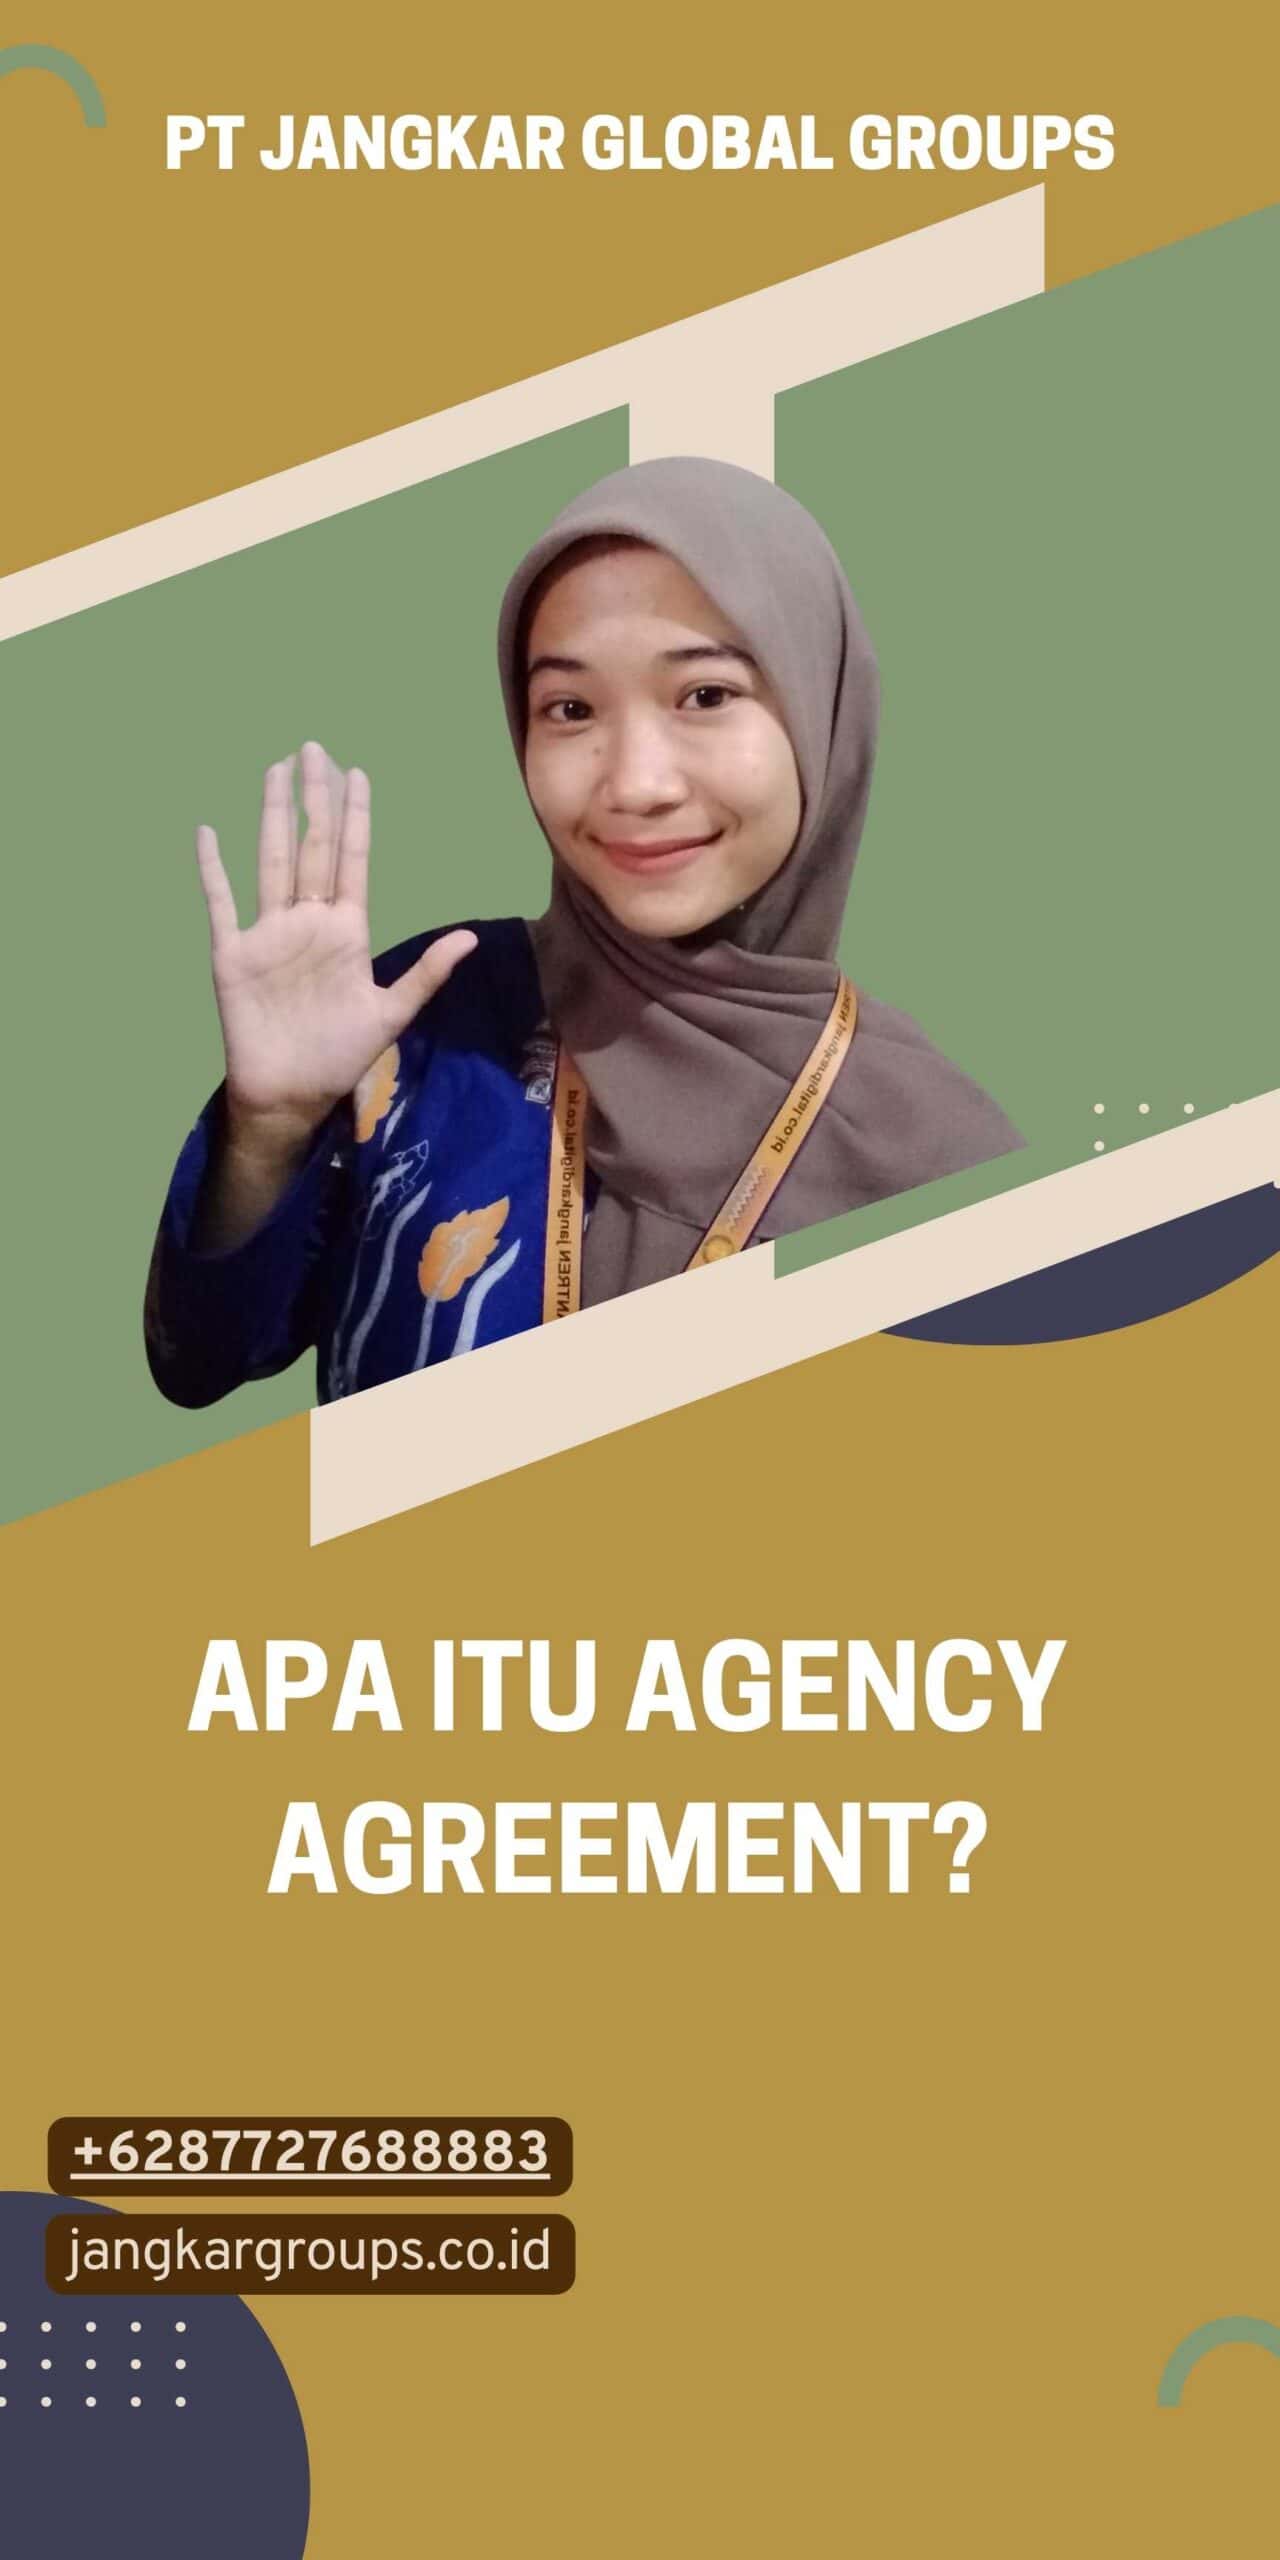 Apa itu Agency Agreement?